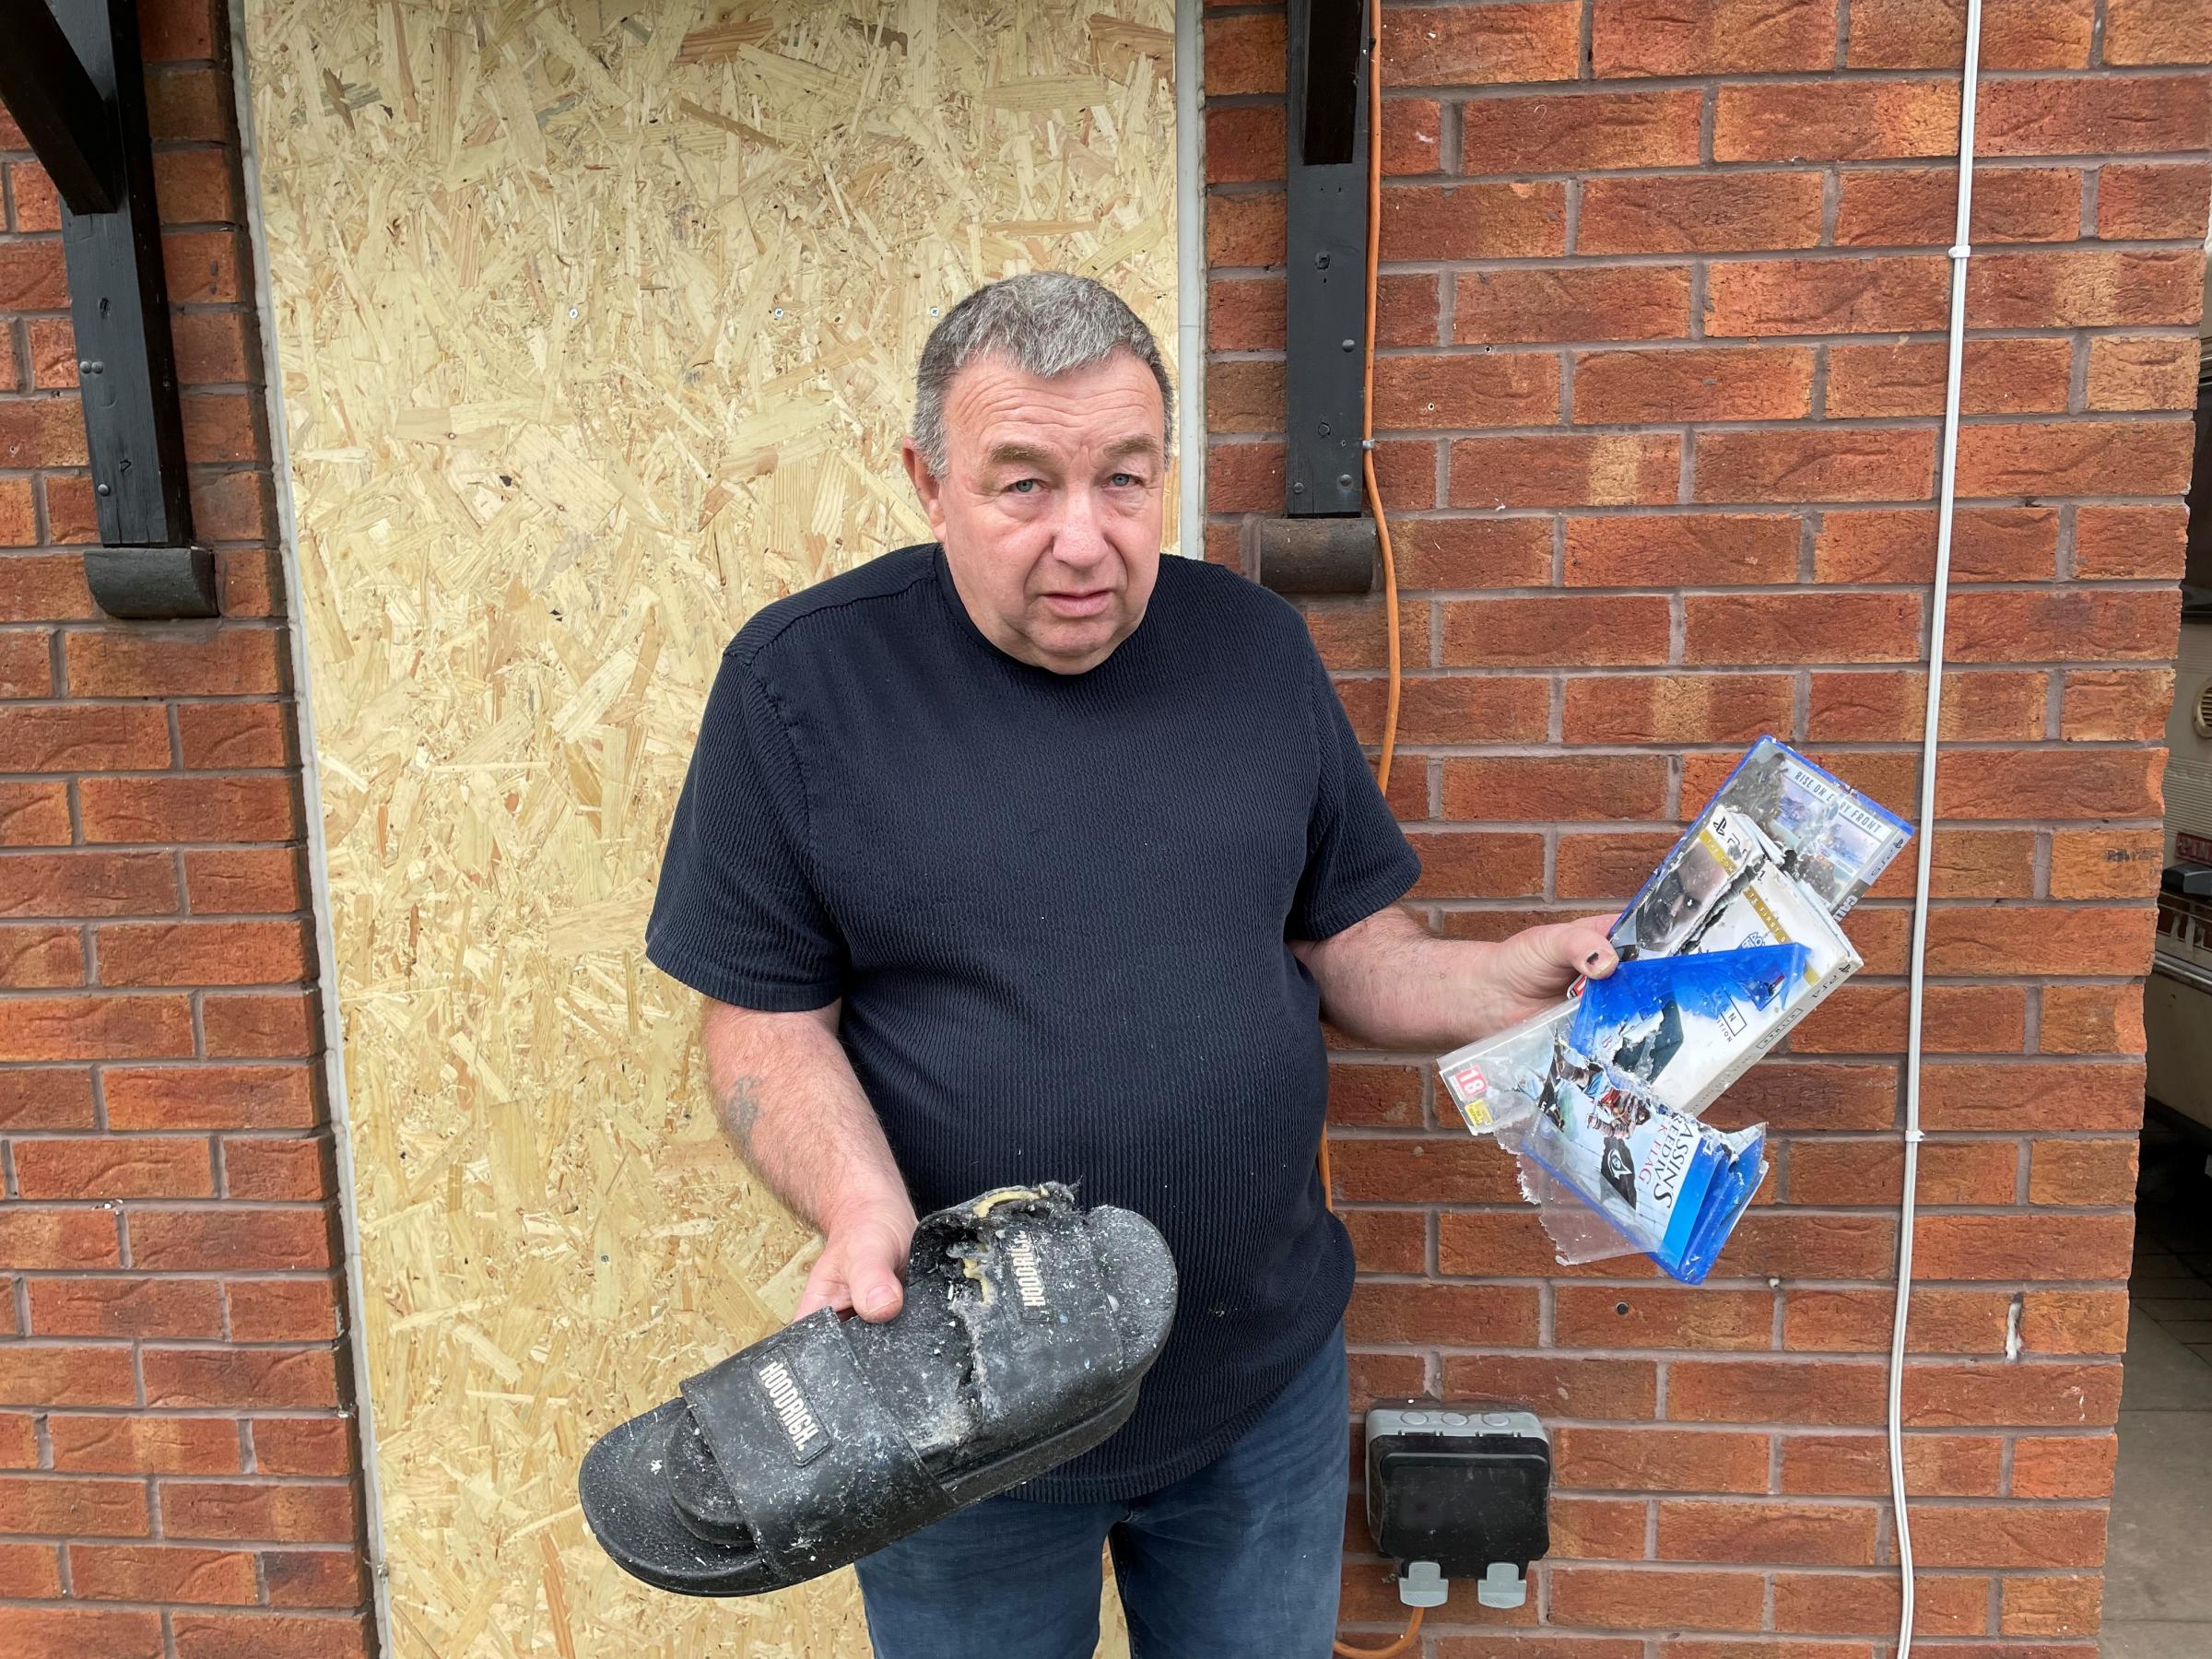 'Chainsaw cops cut up my £100 flipflops' says angry granddad after dawn raid